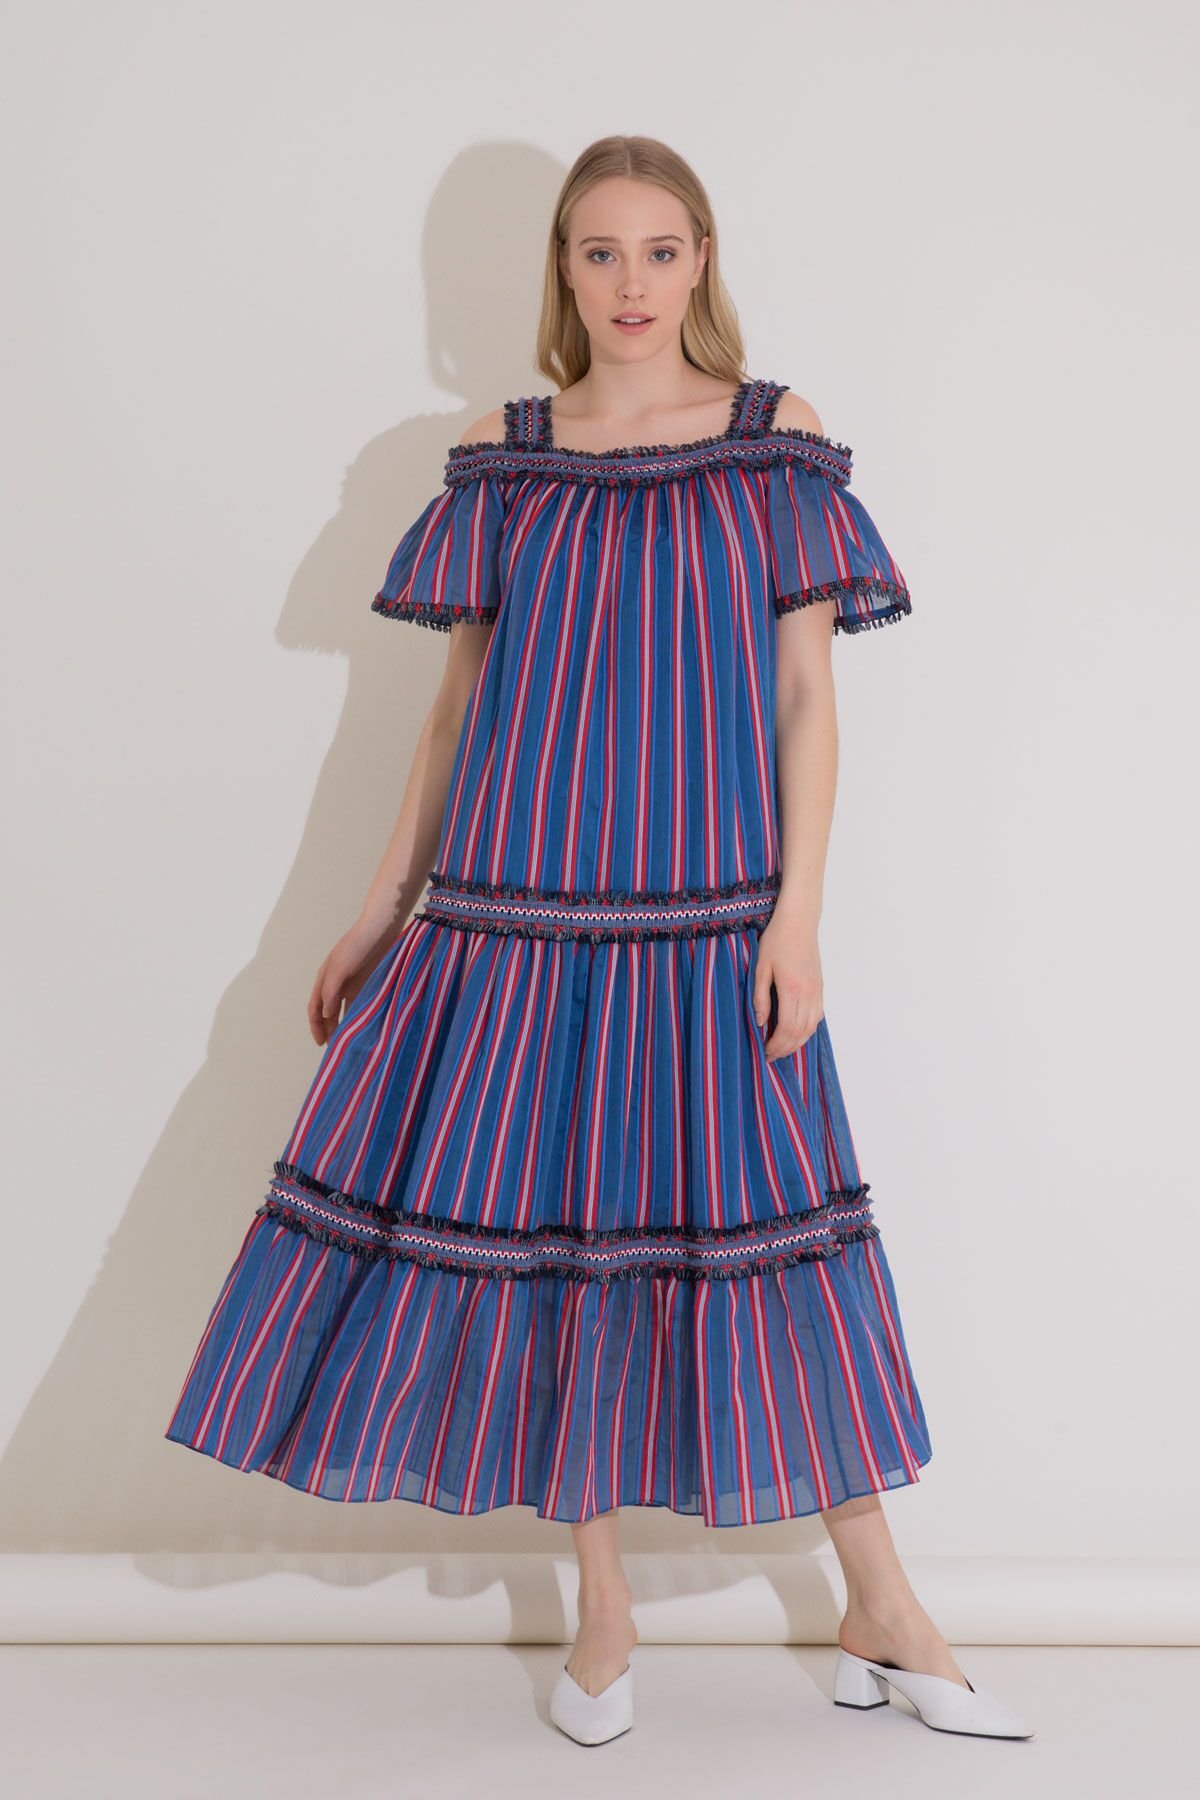 Embroidered Stripe Detailed Transparent Striped Ankle-Length Blue Dress